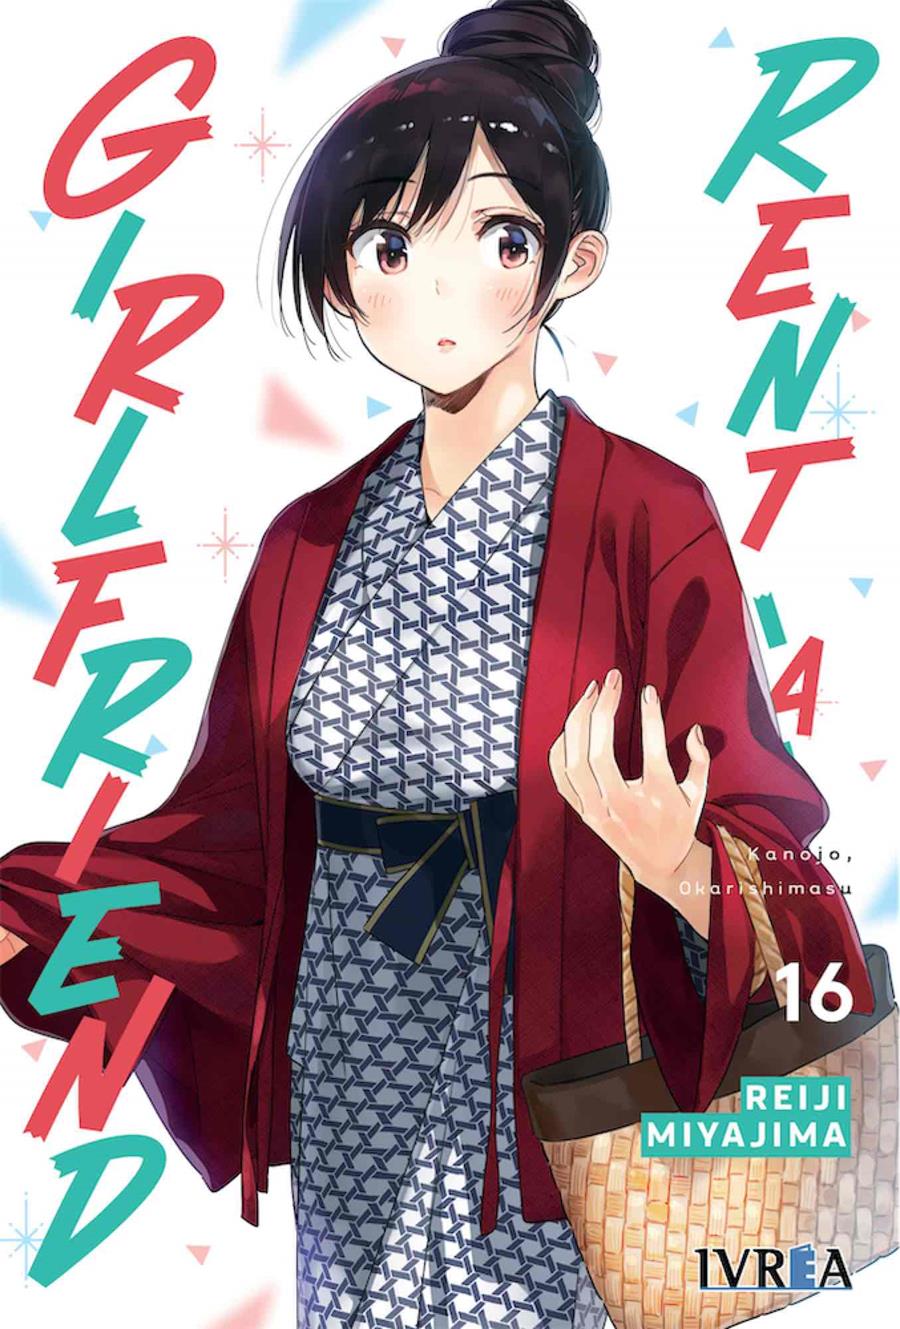 Rent-a-girlfriend 16 | N0922-IVR08 | Reiji Miyajima | Terra de Còmic - Tu tienda de cómics online especializada en cómics, manga y merchandising